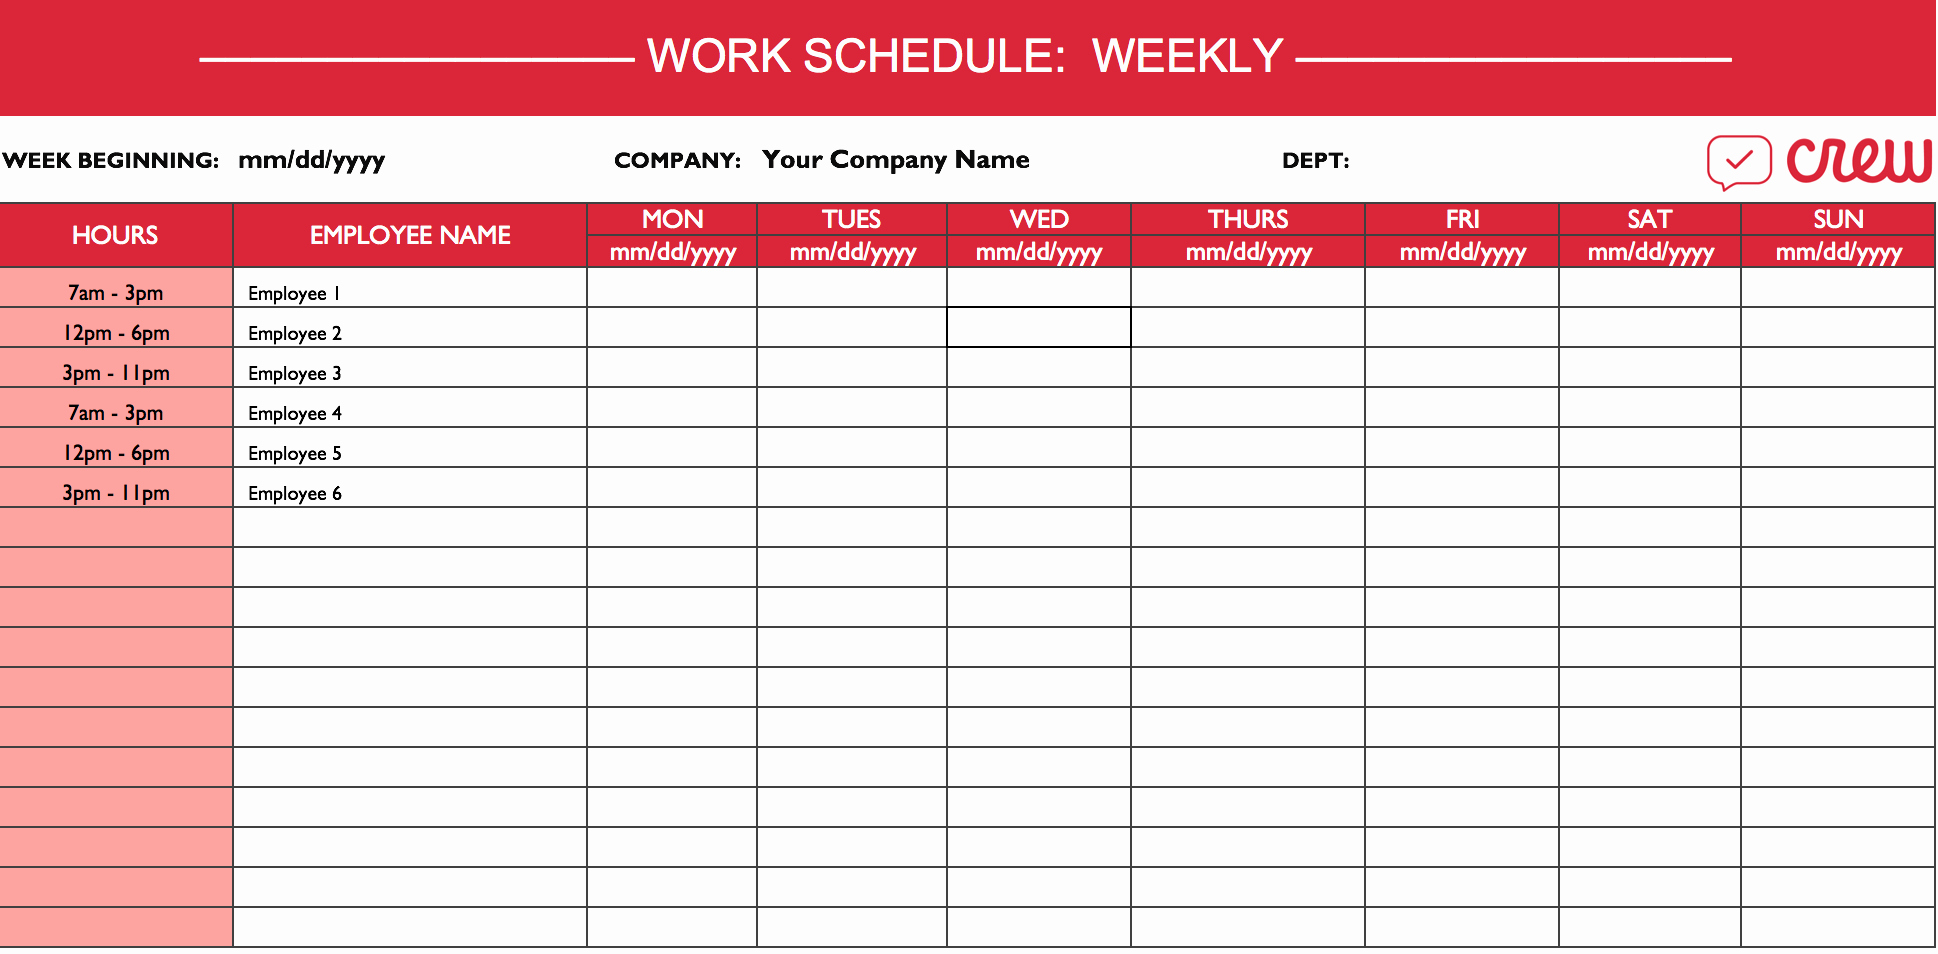 Weekly Employee Shift Schedule Template Best Of Weekly Work Schedule Template I Crew